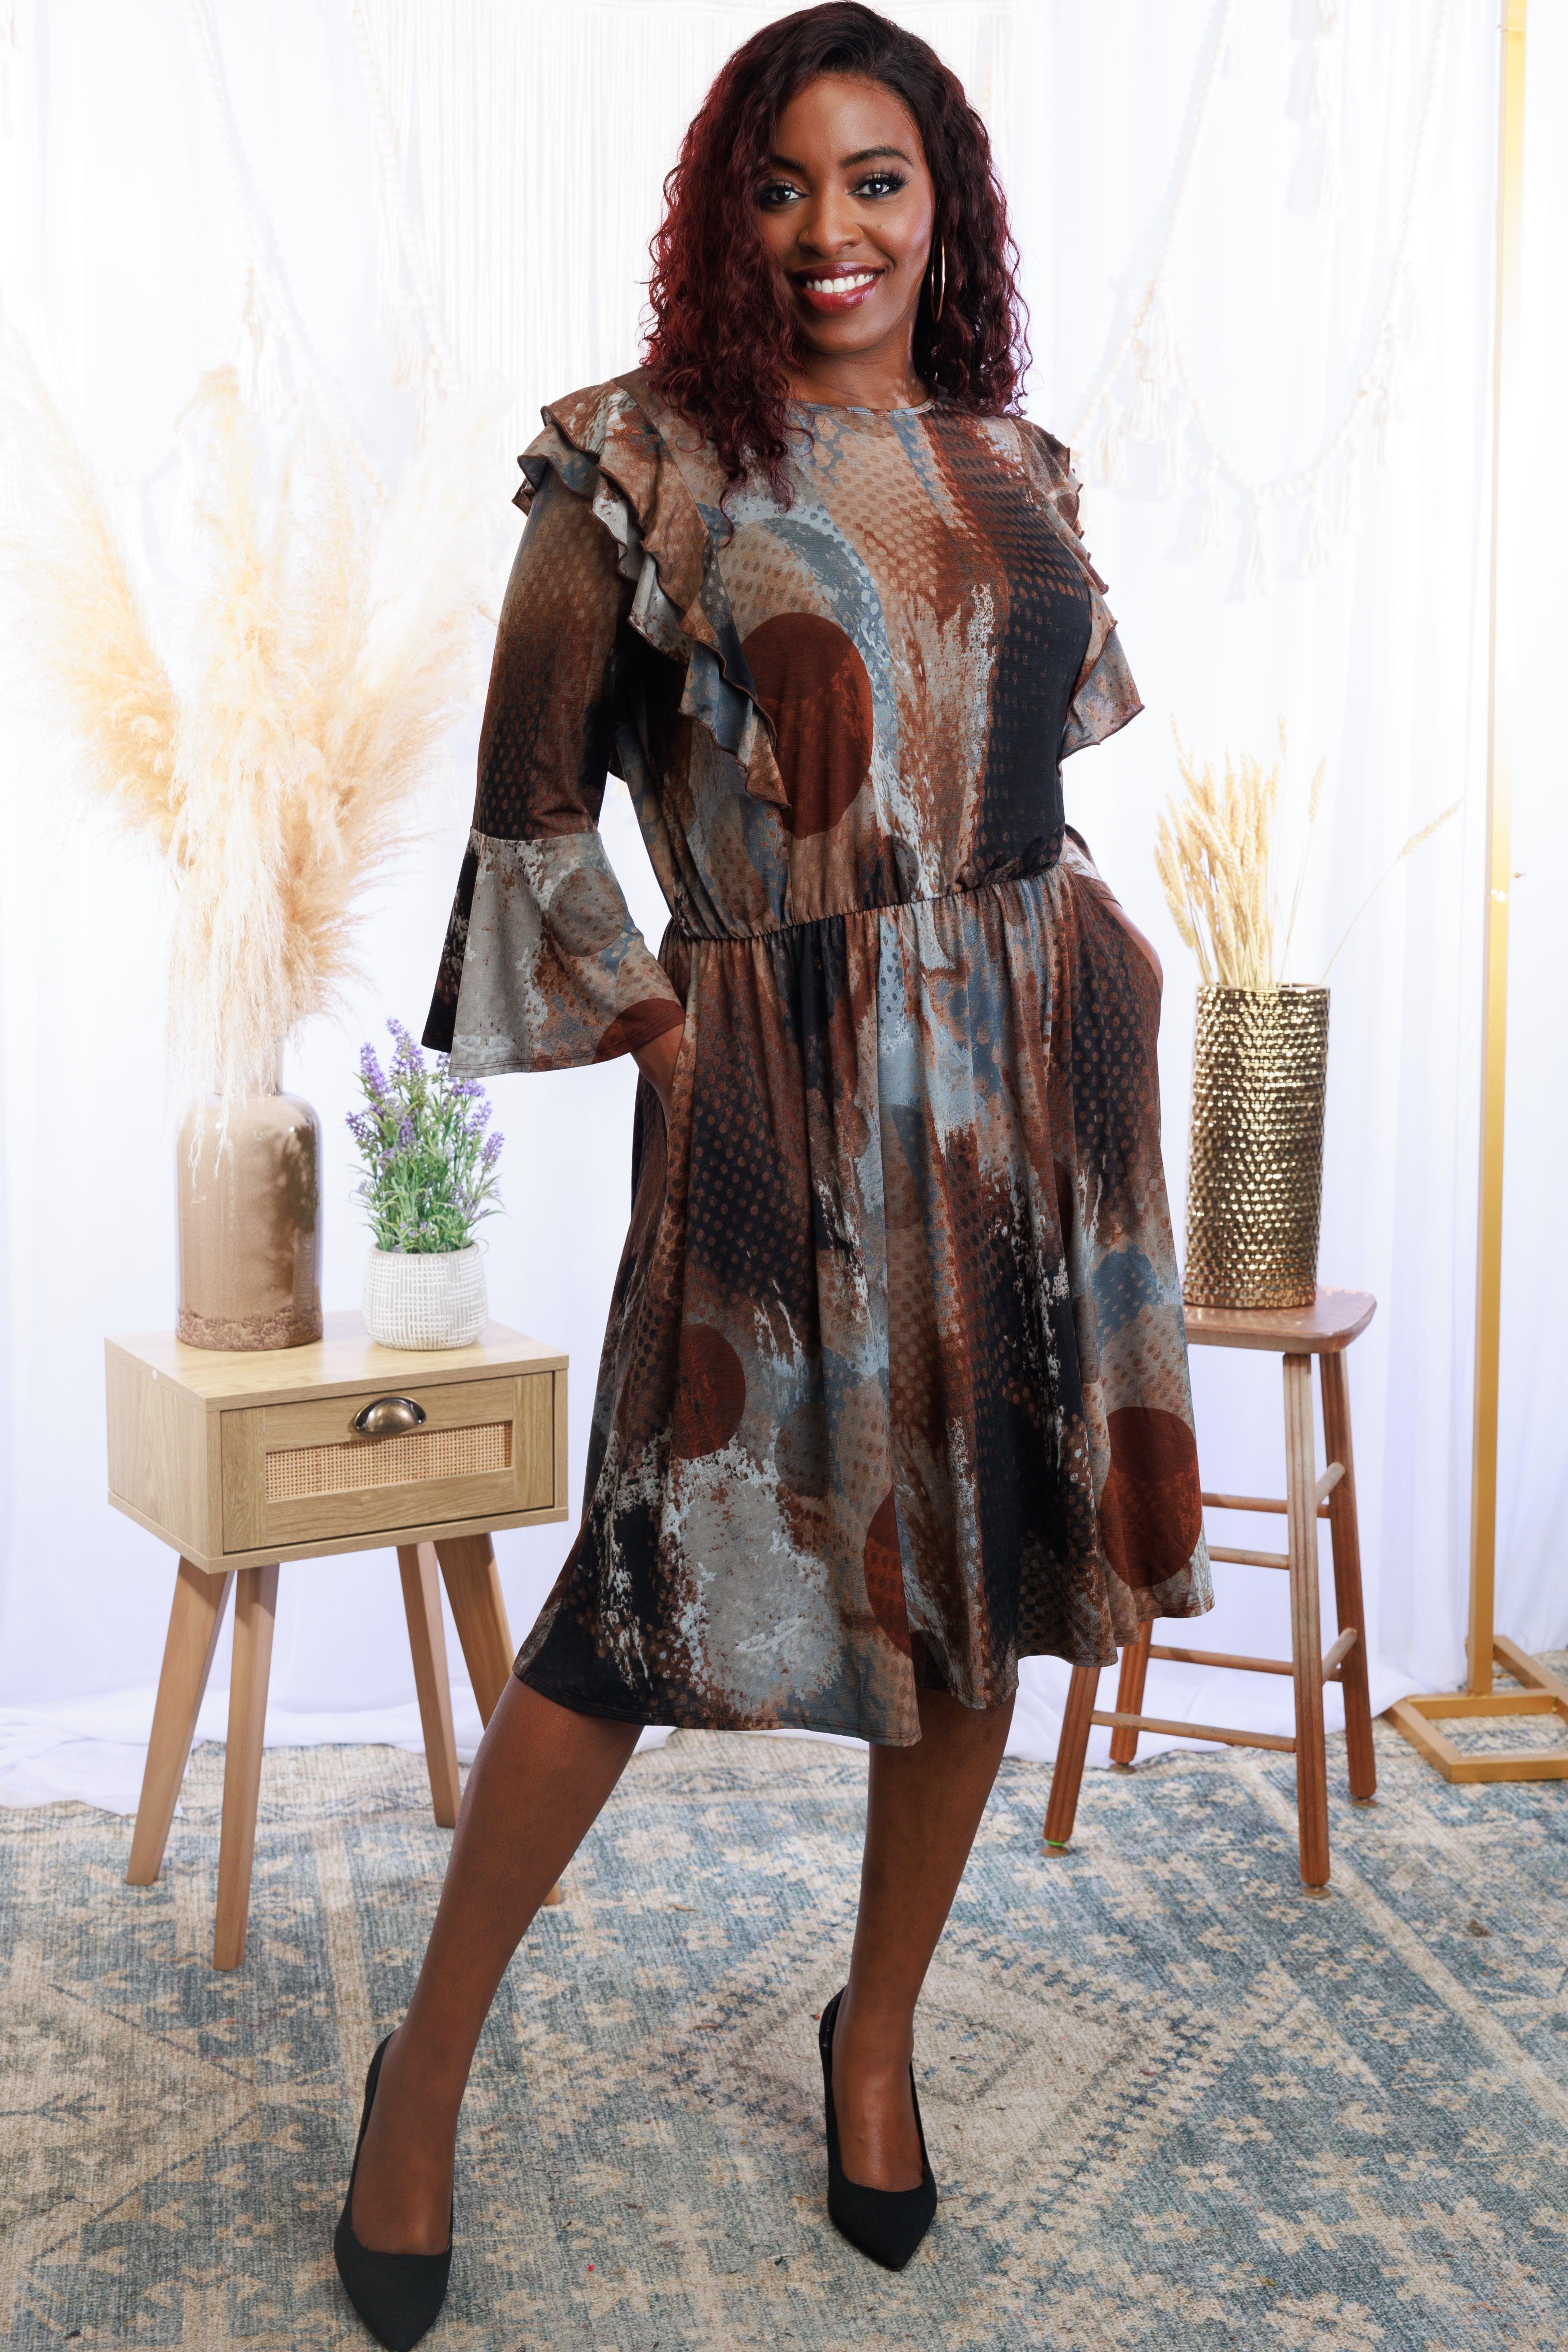 Modern Art - Ruffle Sleeve Dress Giftmas Boutique Simplified   